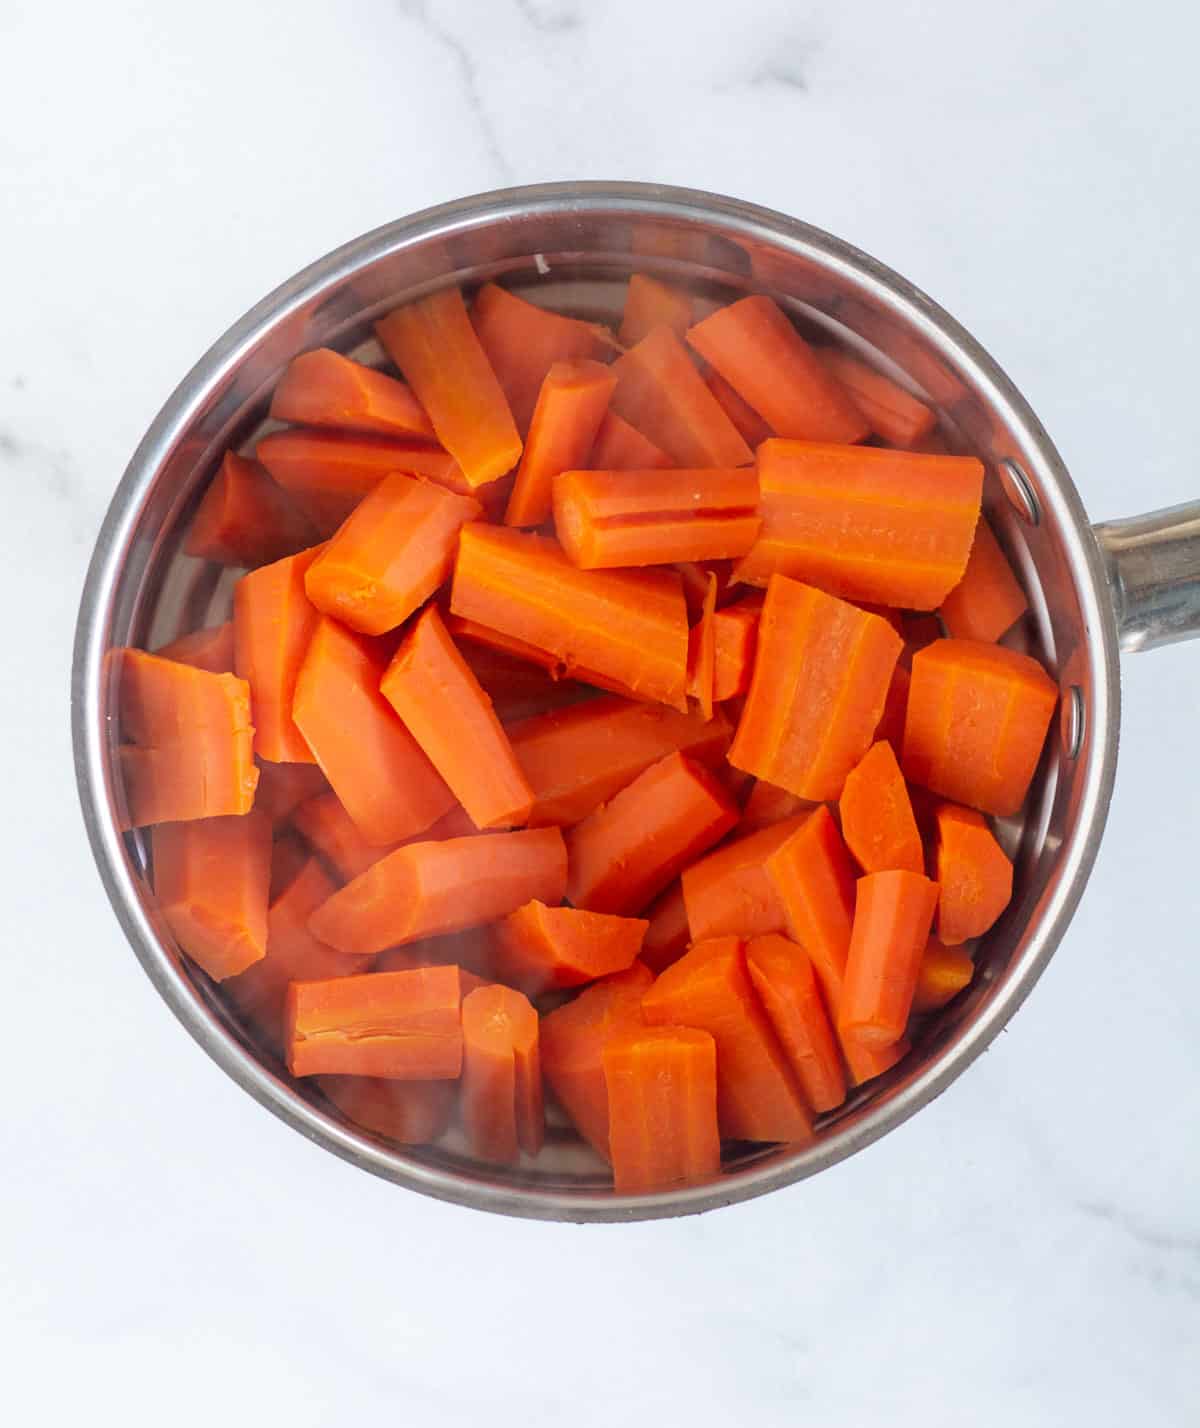 steamed carrots in steamer basket.